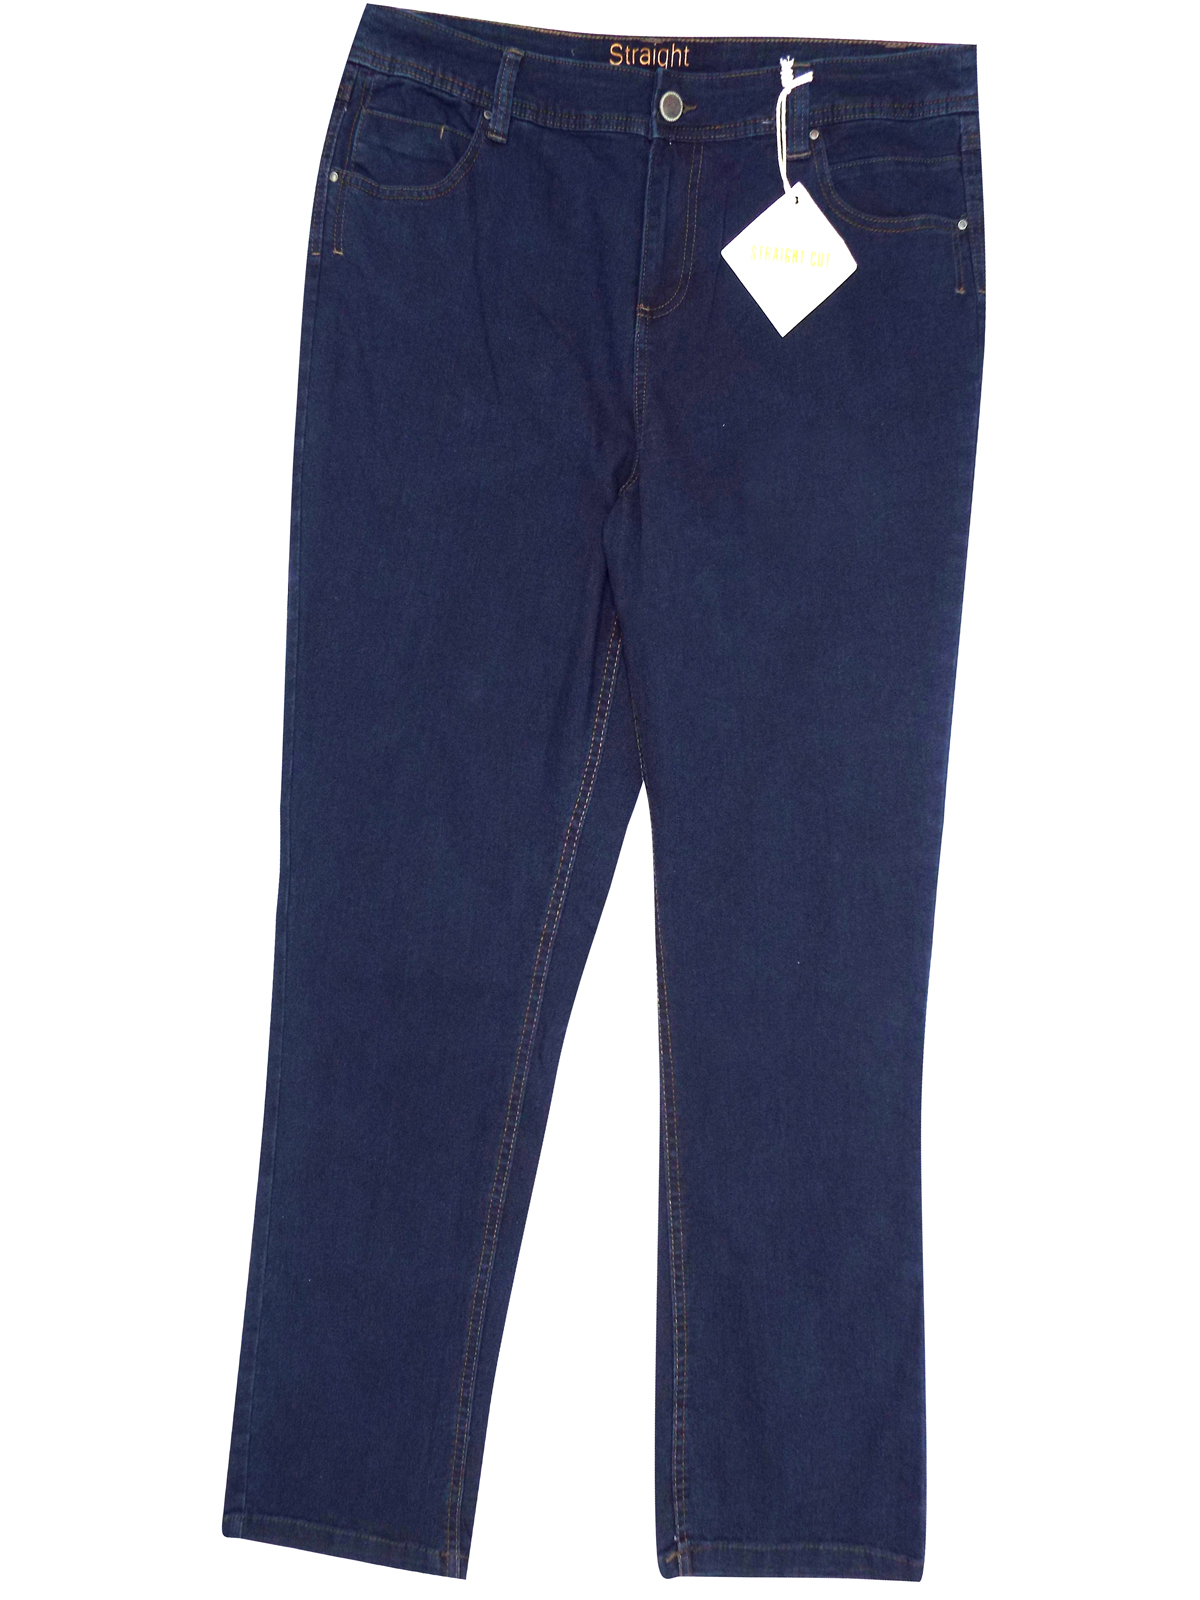 DARK-DENIM Cotton Rich Straight Fit Denim Jeans - Plus Size 14 to 32 (Leng